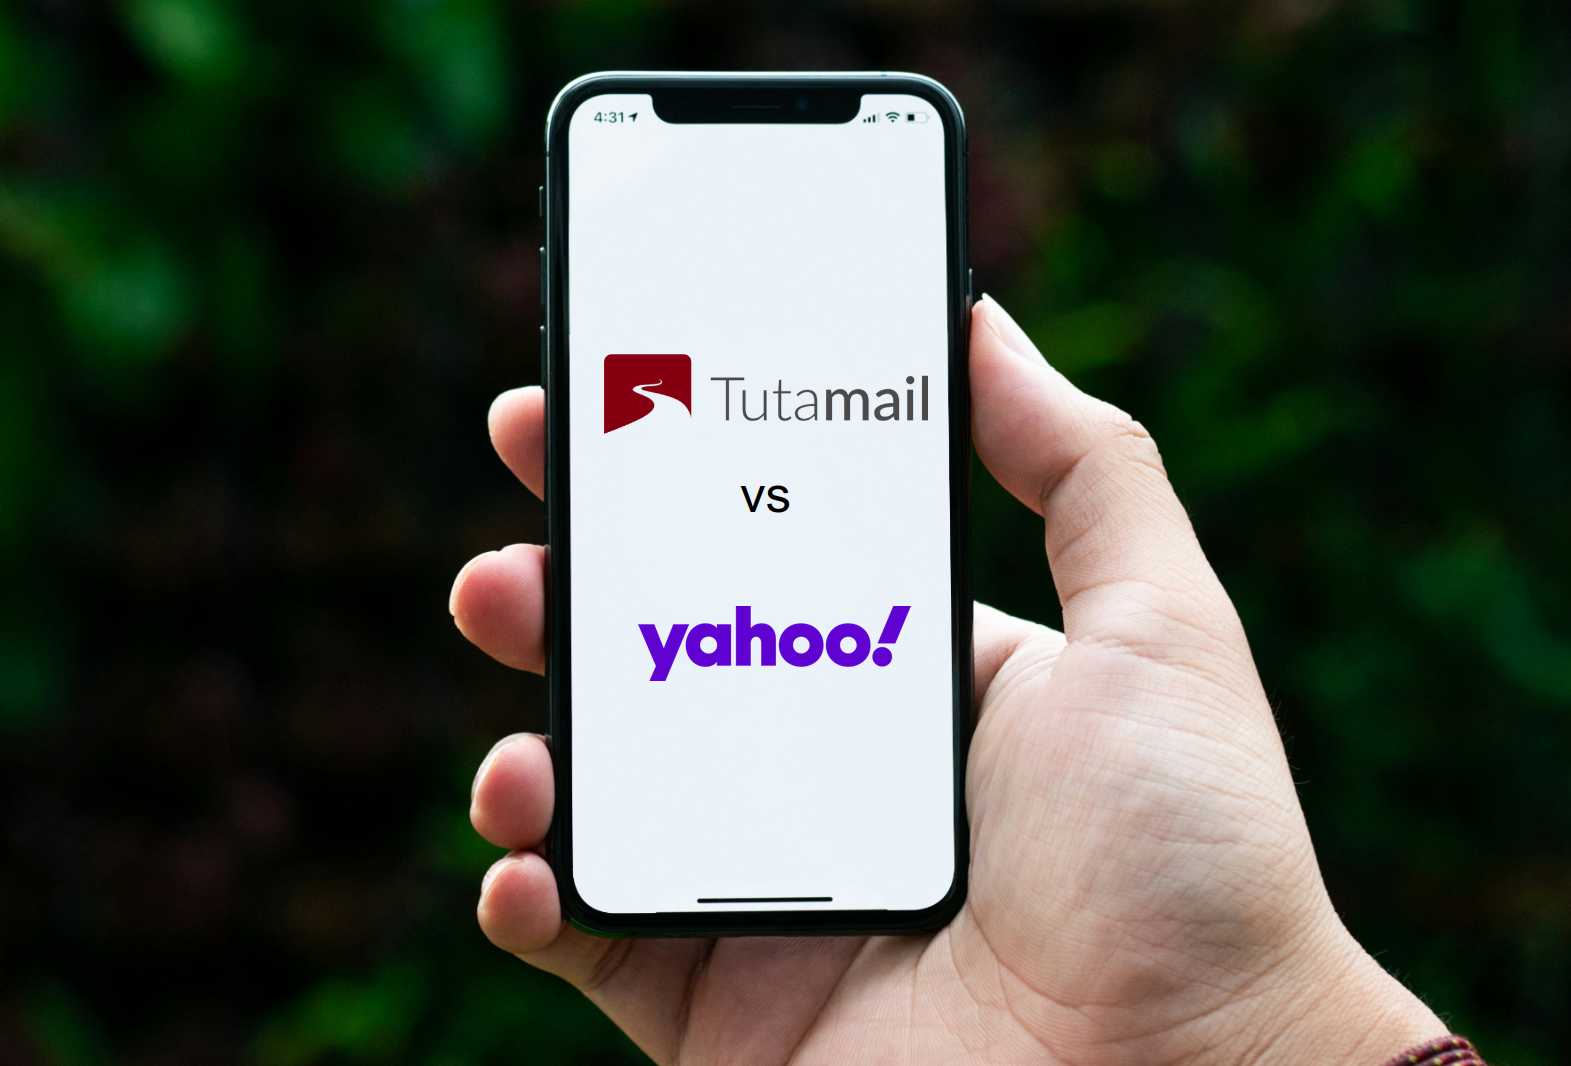 Yahooの代替メールとして最適なのは？YahooとTuta Mailを比較してみましょう。